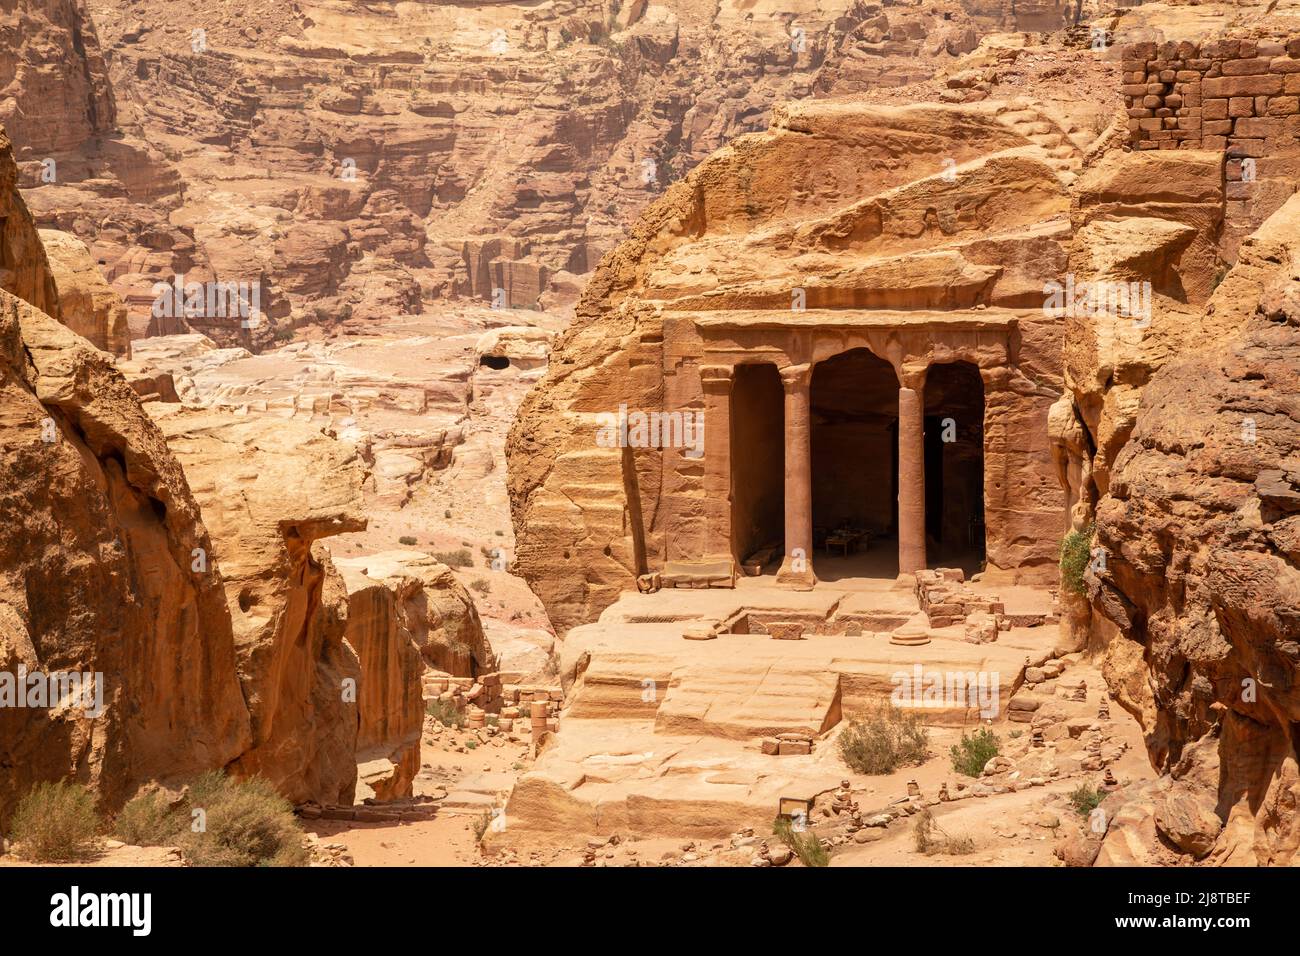 Ancient Garden temple carved in sandstone rock in the Wadi Farasa canyon, Petra, Jordan Stock Photo